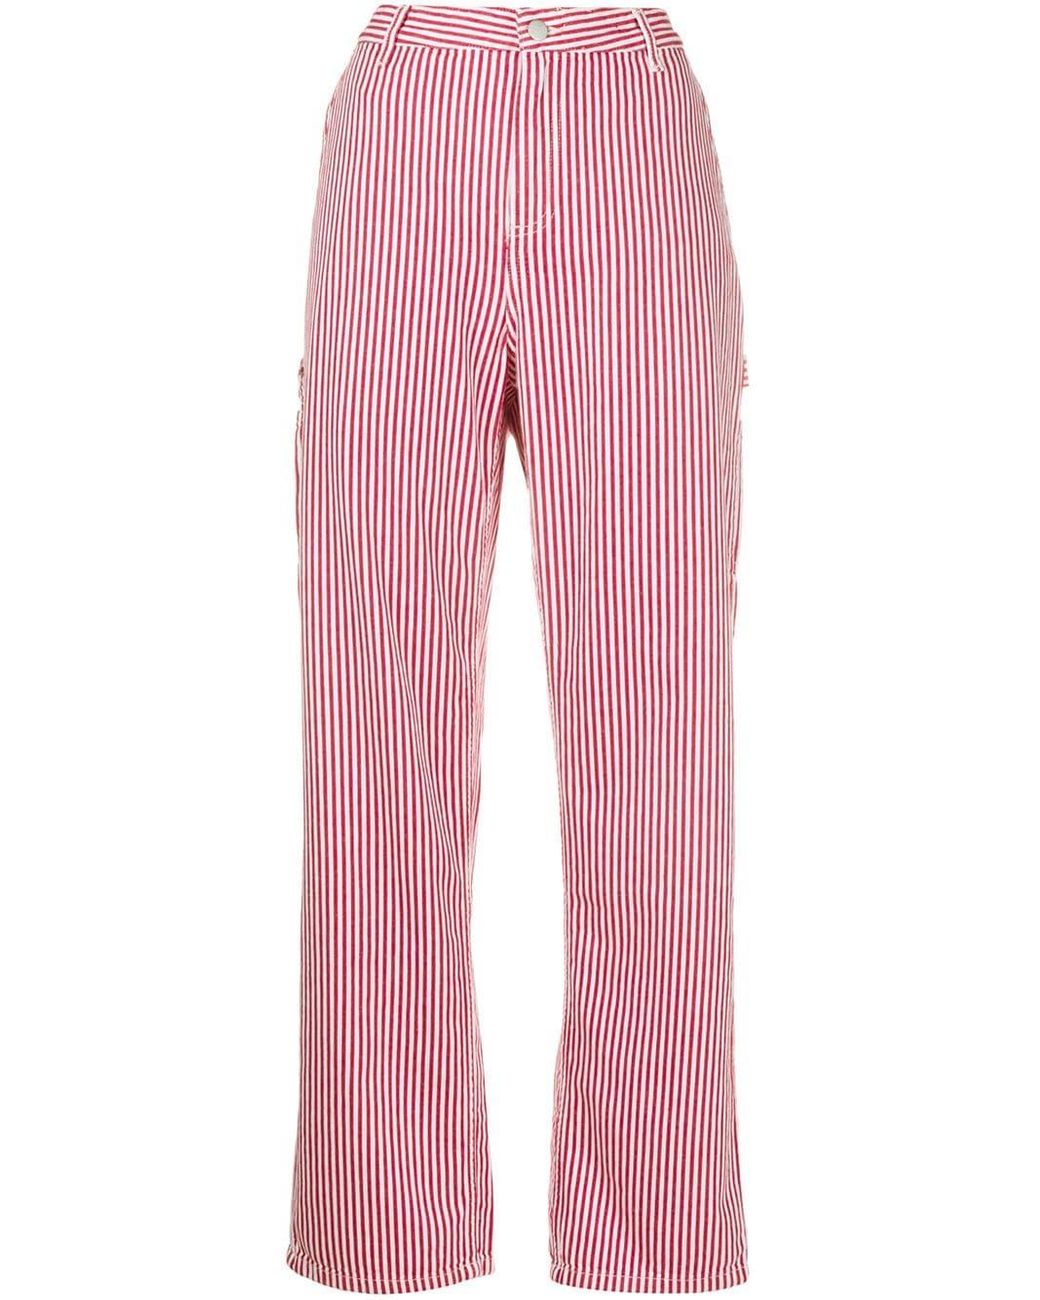 Carhartt WIP Striped Trousers in Lyst